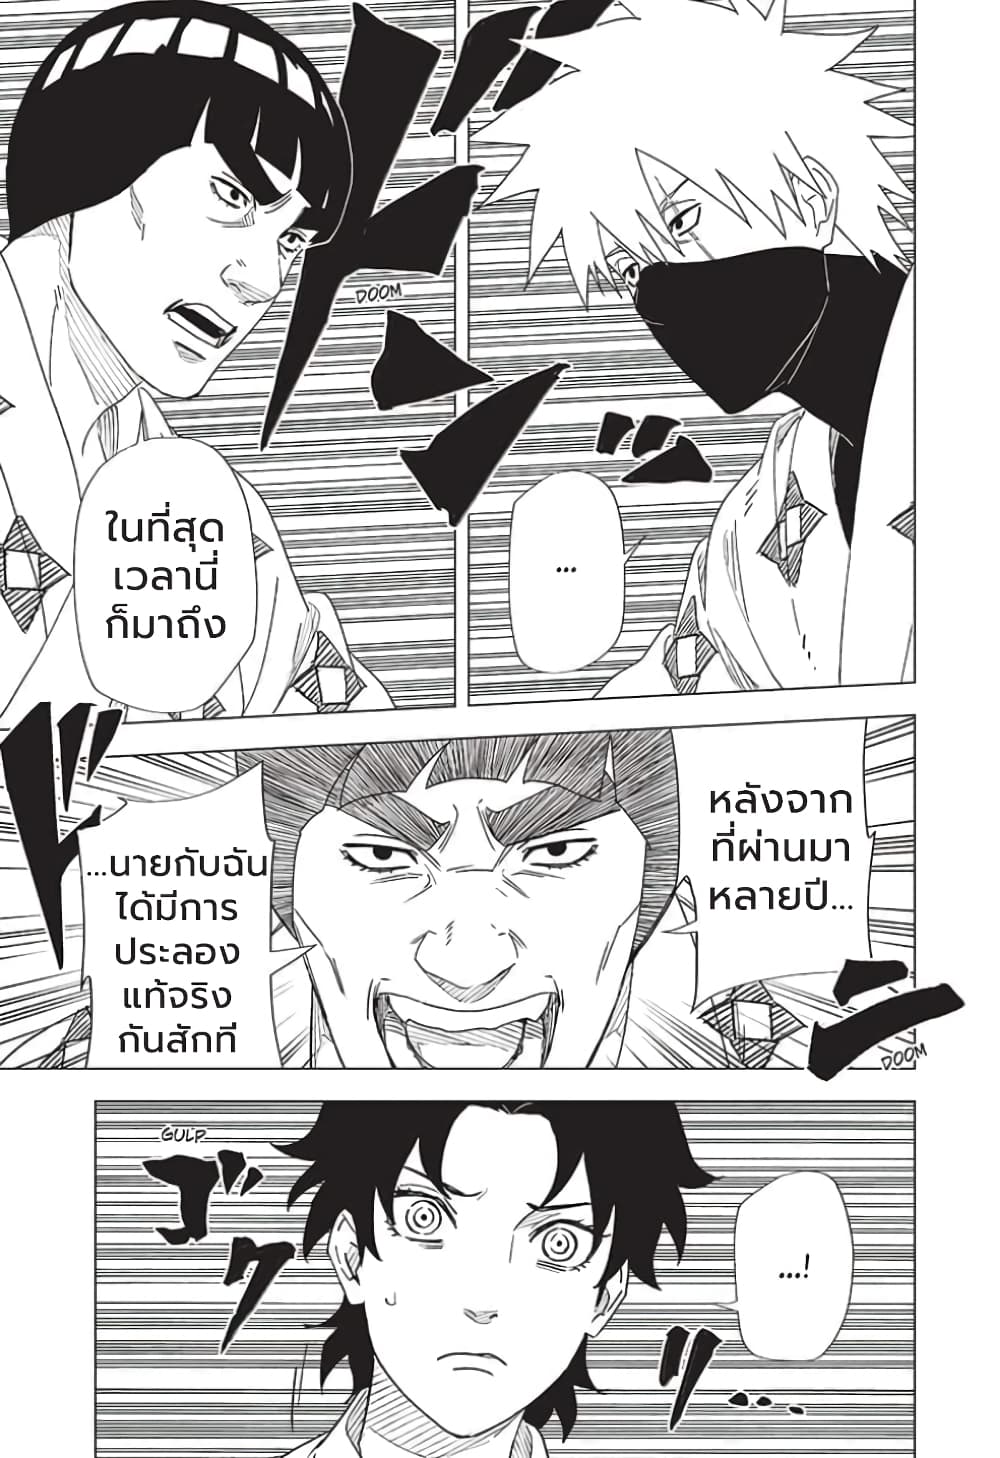 Naruto Konoha’s Story – The Steam Ninja Scrolls The Manga ตอนที่ 7 (1)